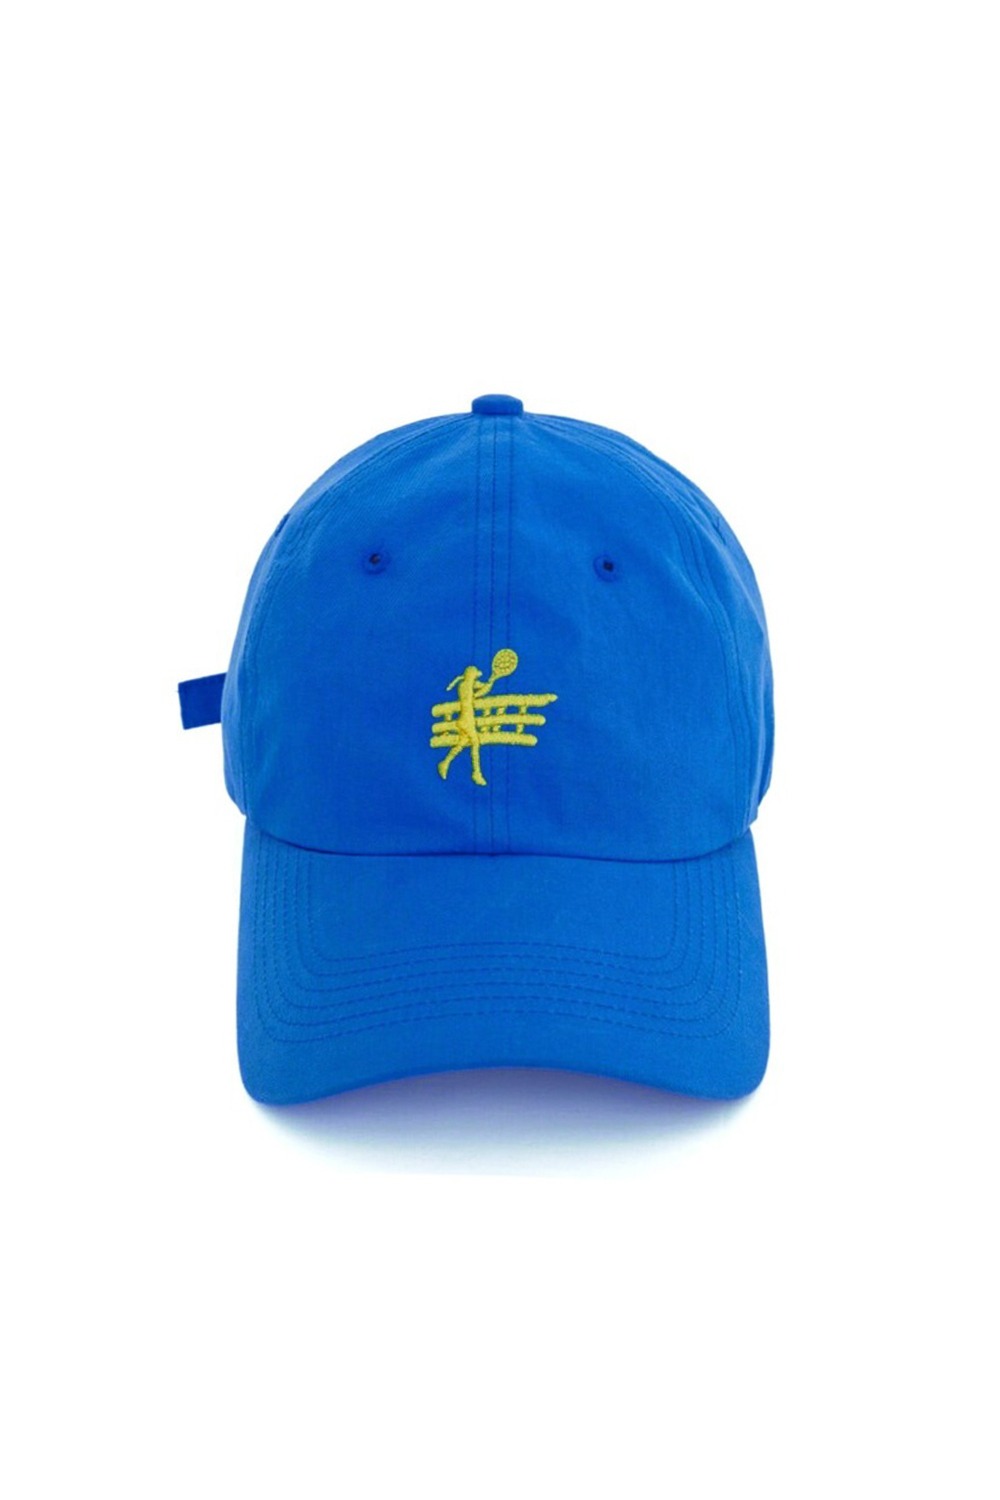 GIALLO TENNIS CAP (BLUE) RICHEZ